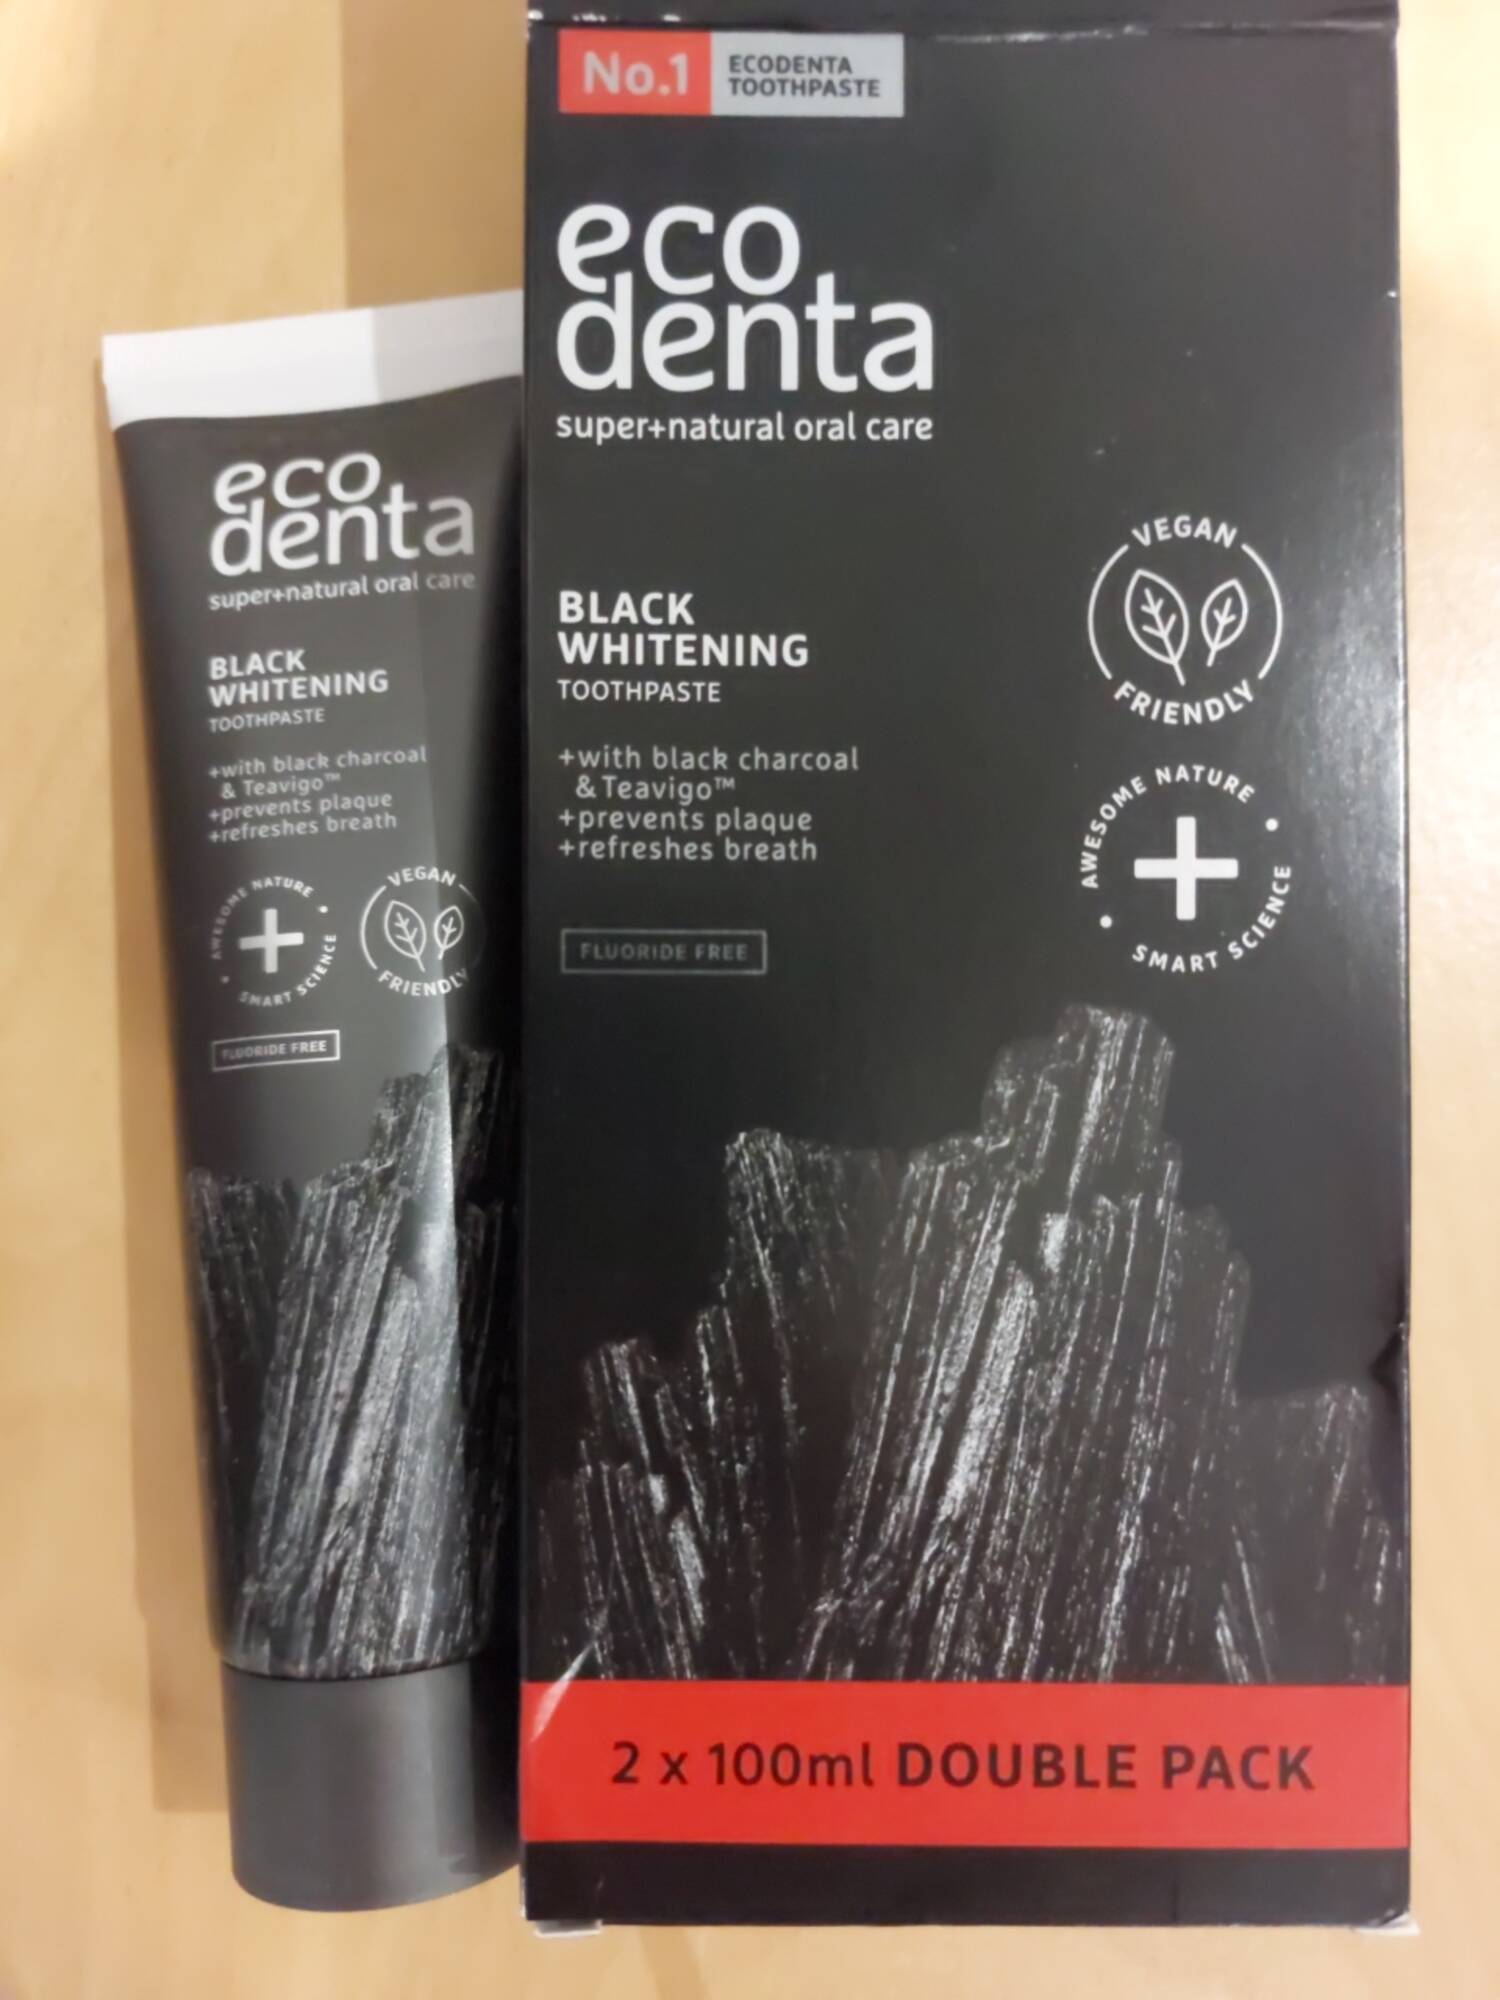 ECODENTA - Black whitening - Toothpaste